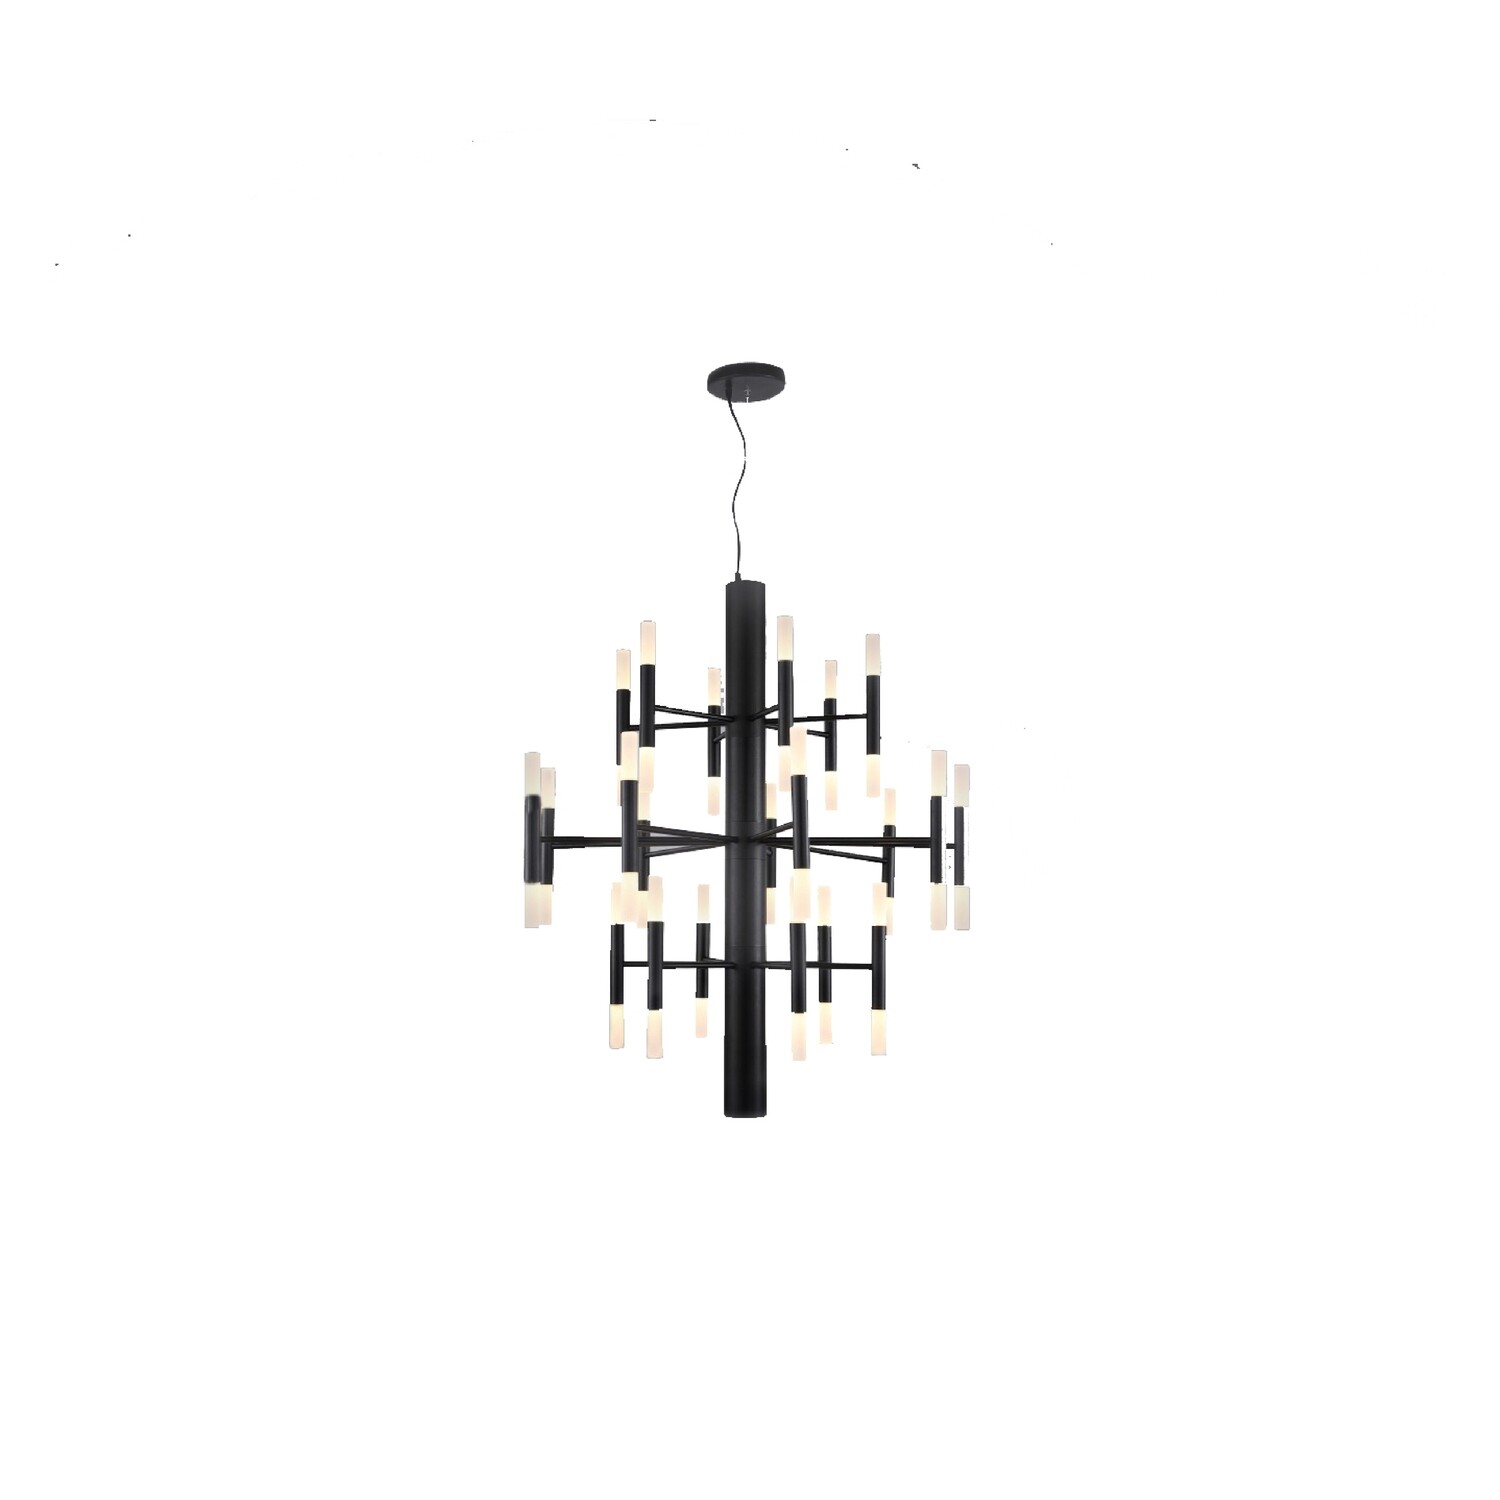 Lámpara tipo candelabro modelo Deco color negro con alto nivel de iluminación y luz extra cálida